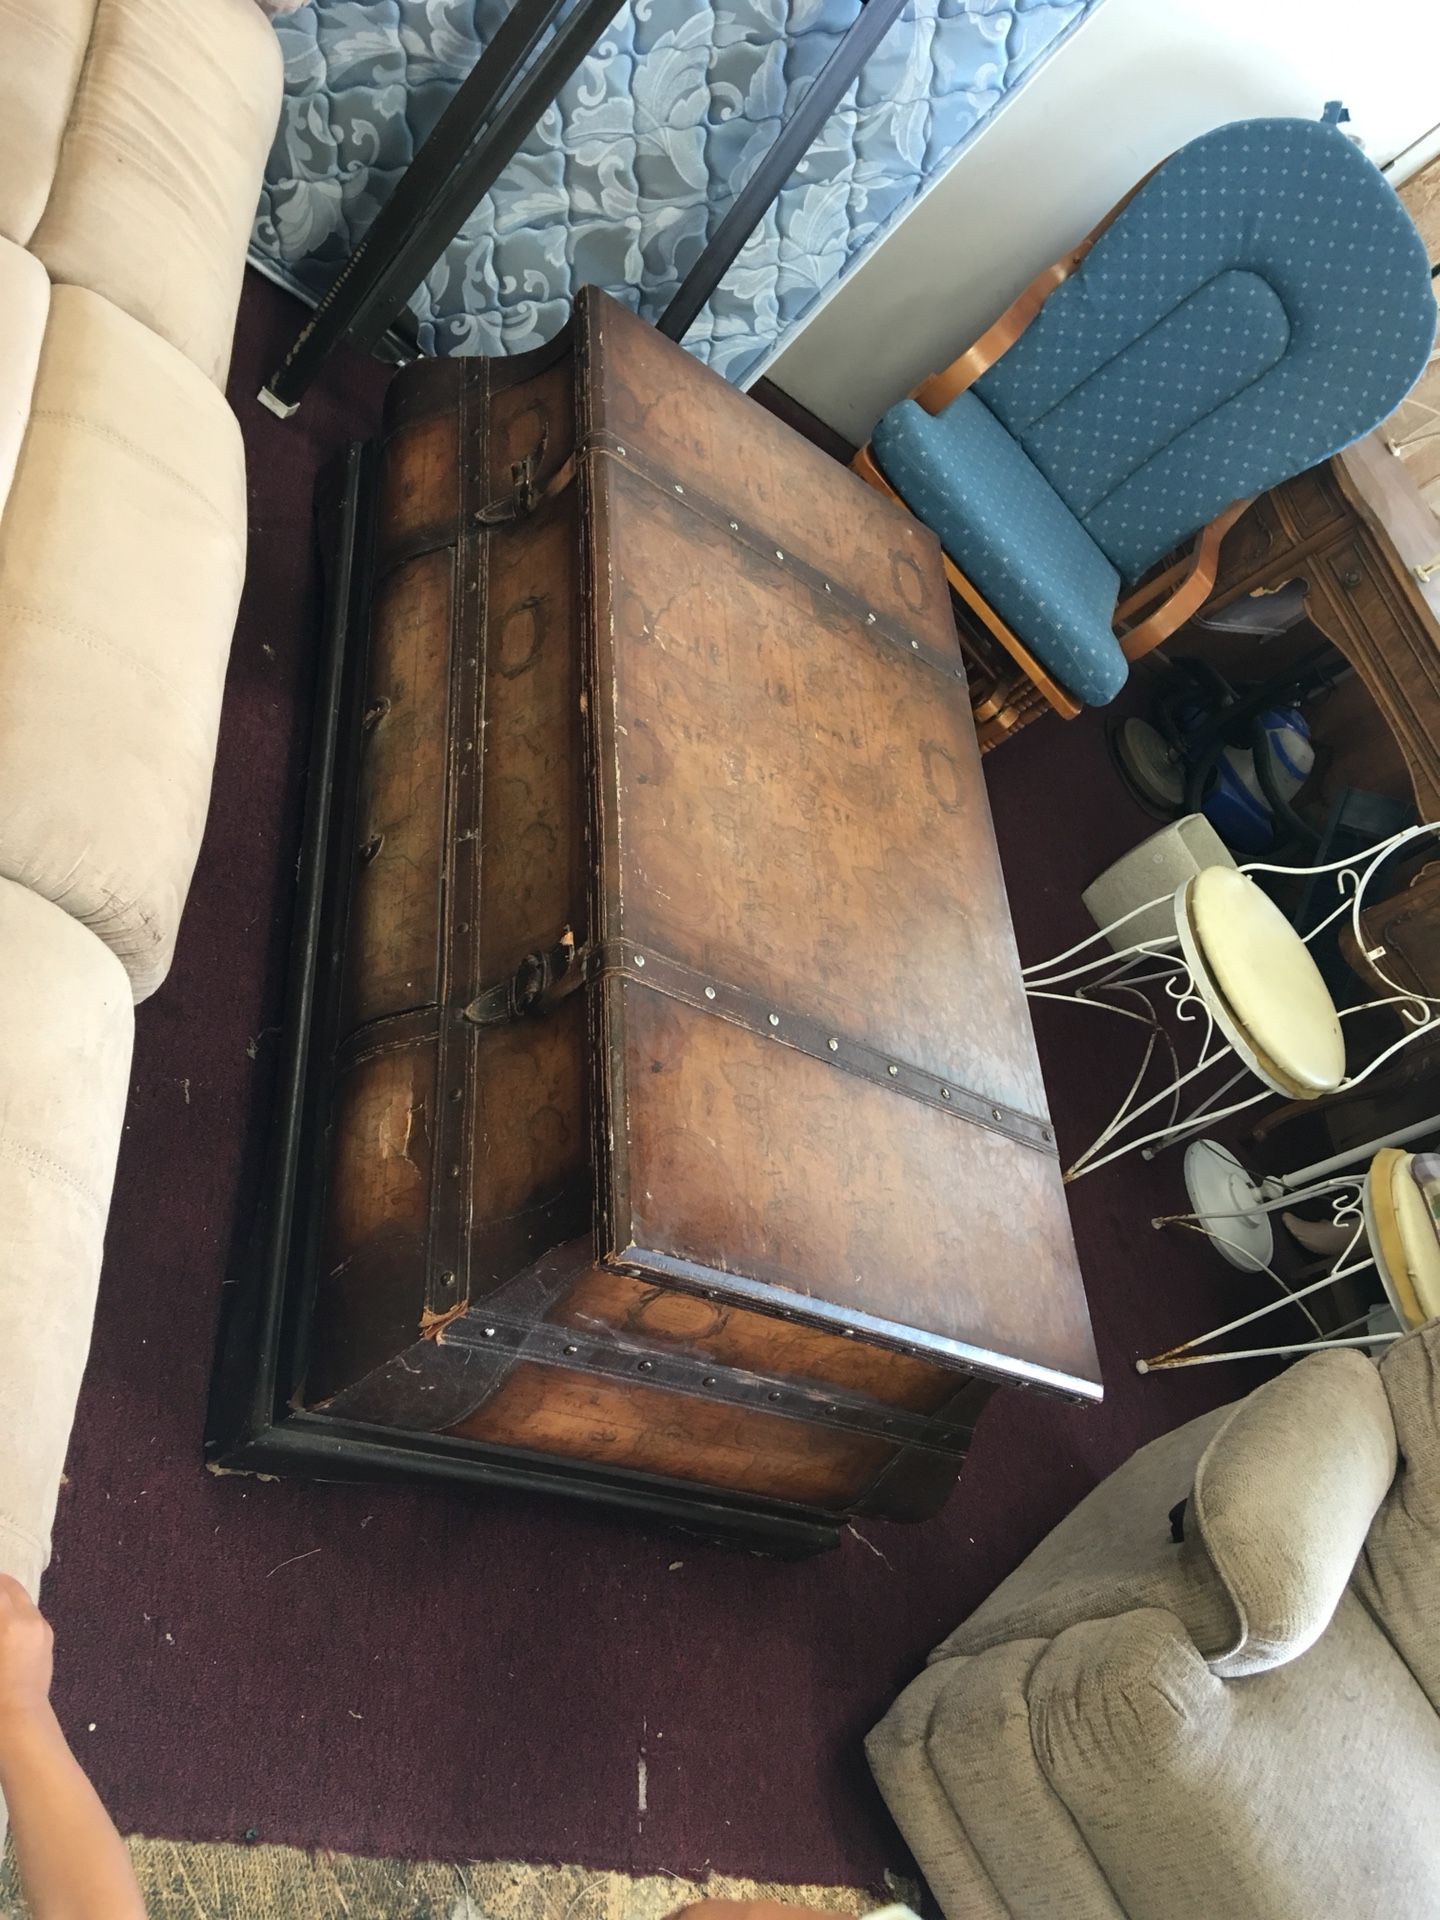 Treasure chest coffee table